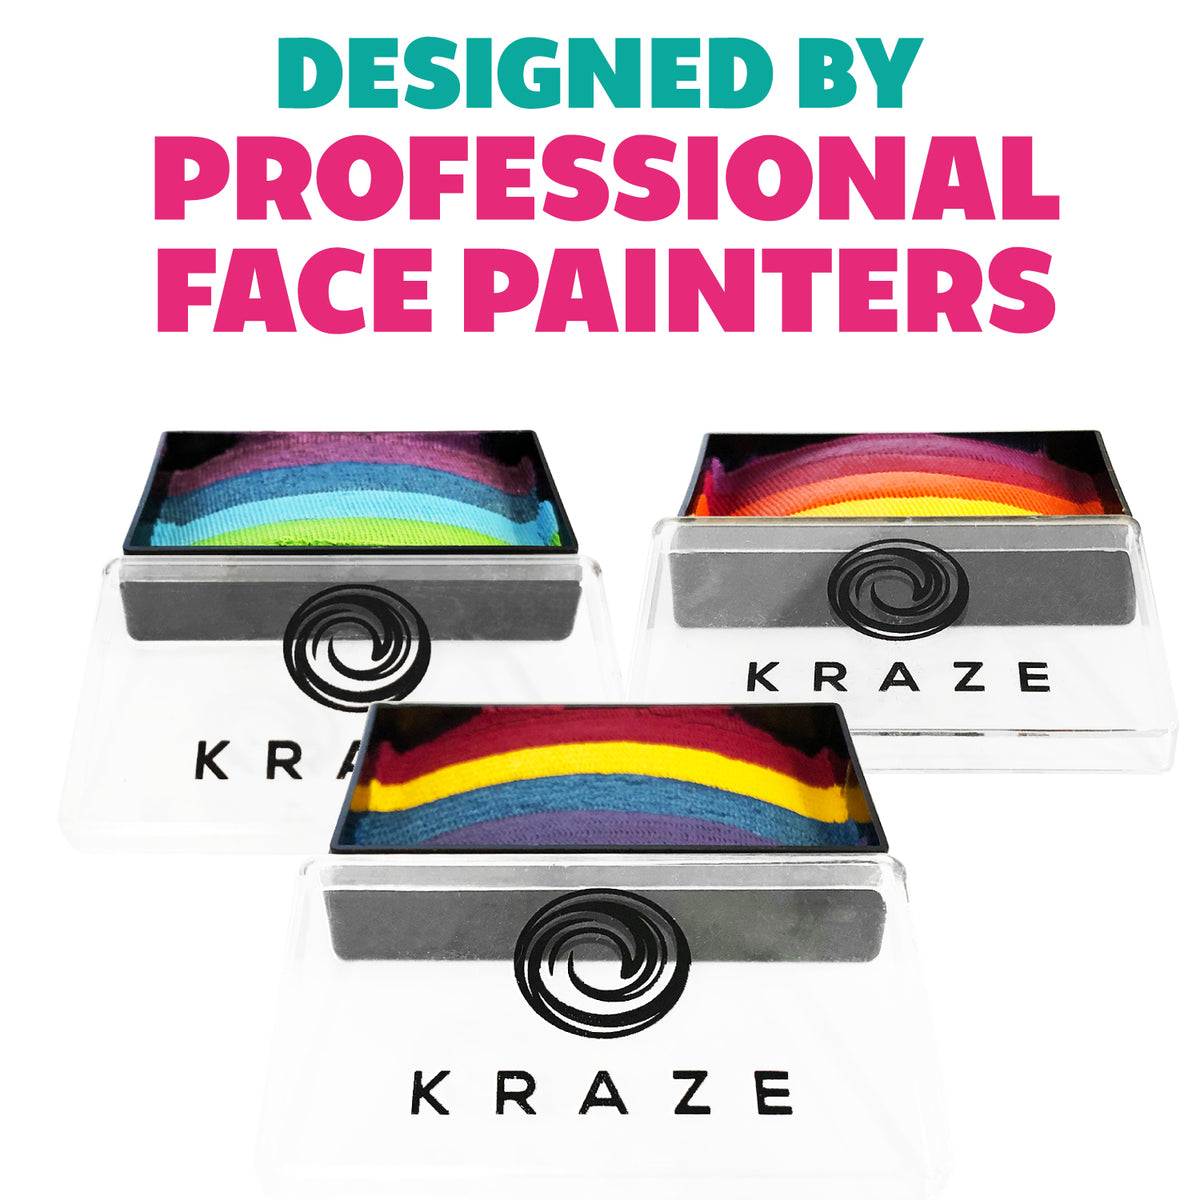 Kraze FX Domed One Stroke Cake - Deep Rainbow (25 gm)